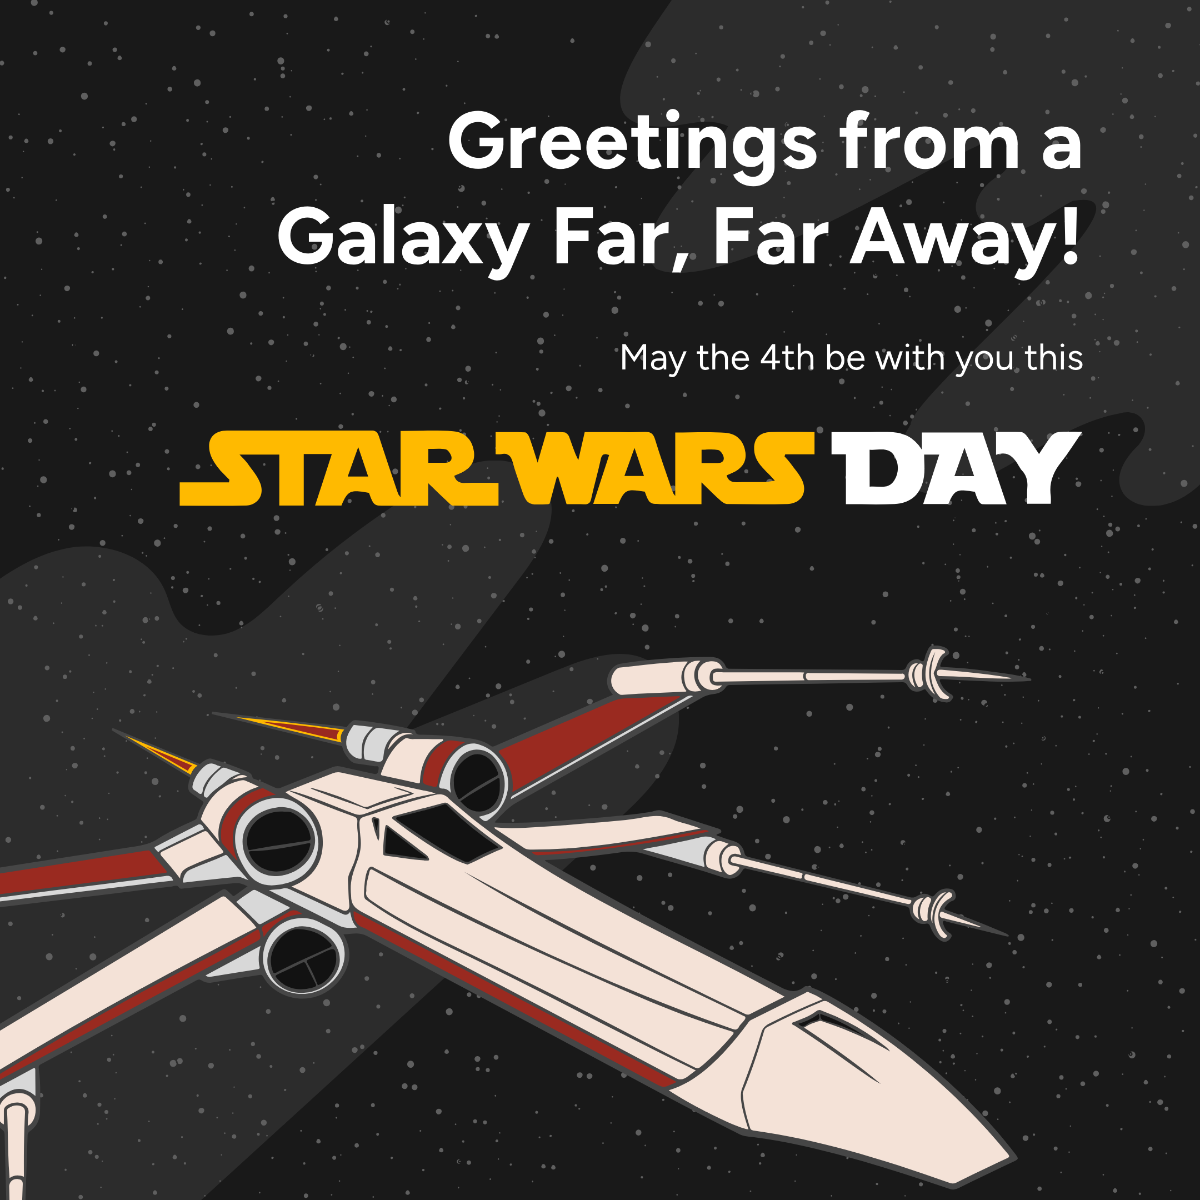 Star Wars Day Facebook Post